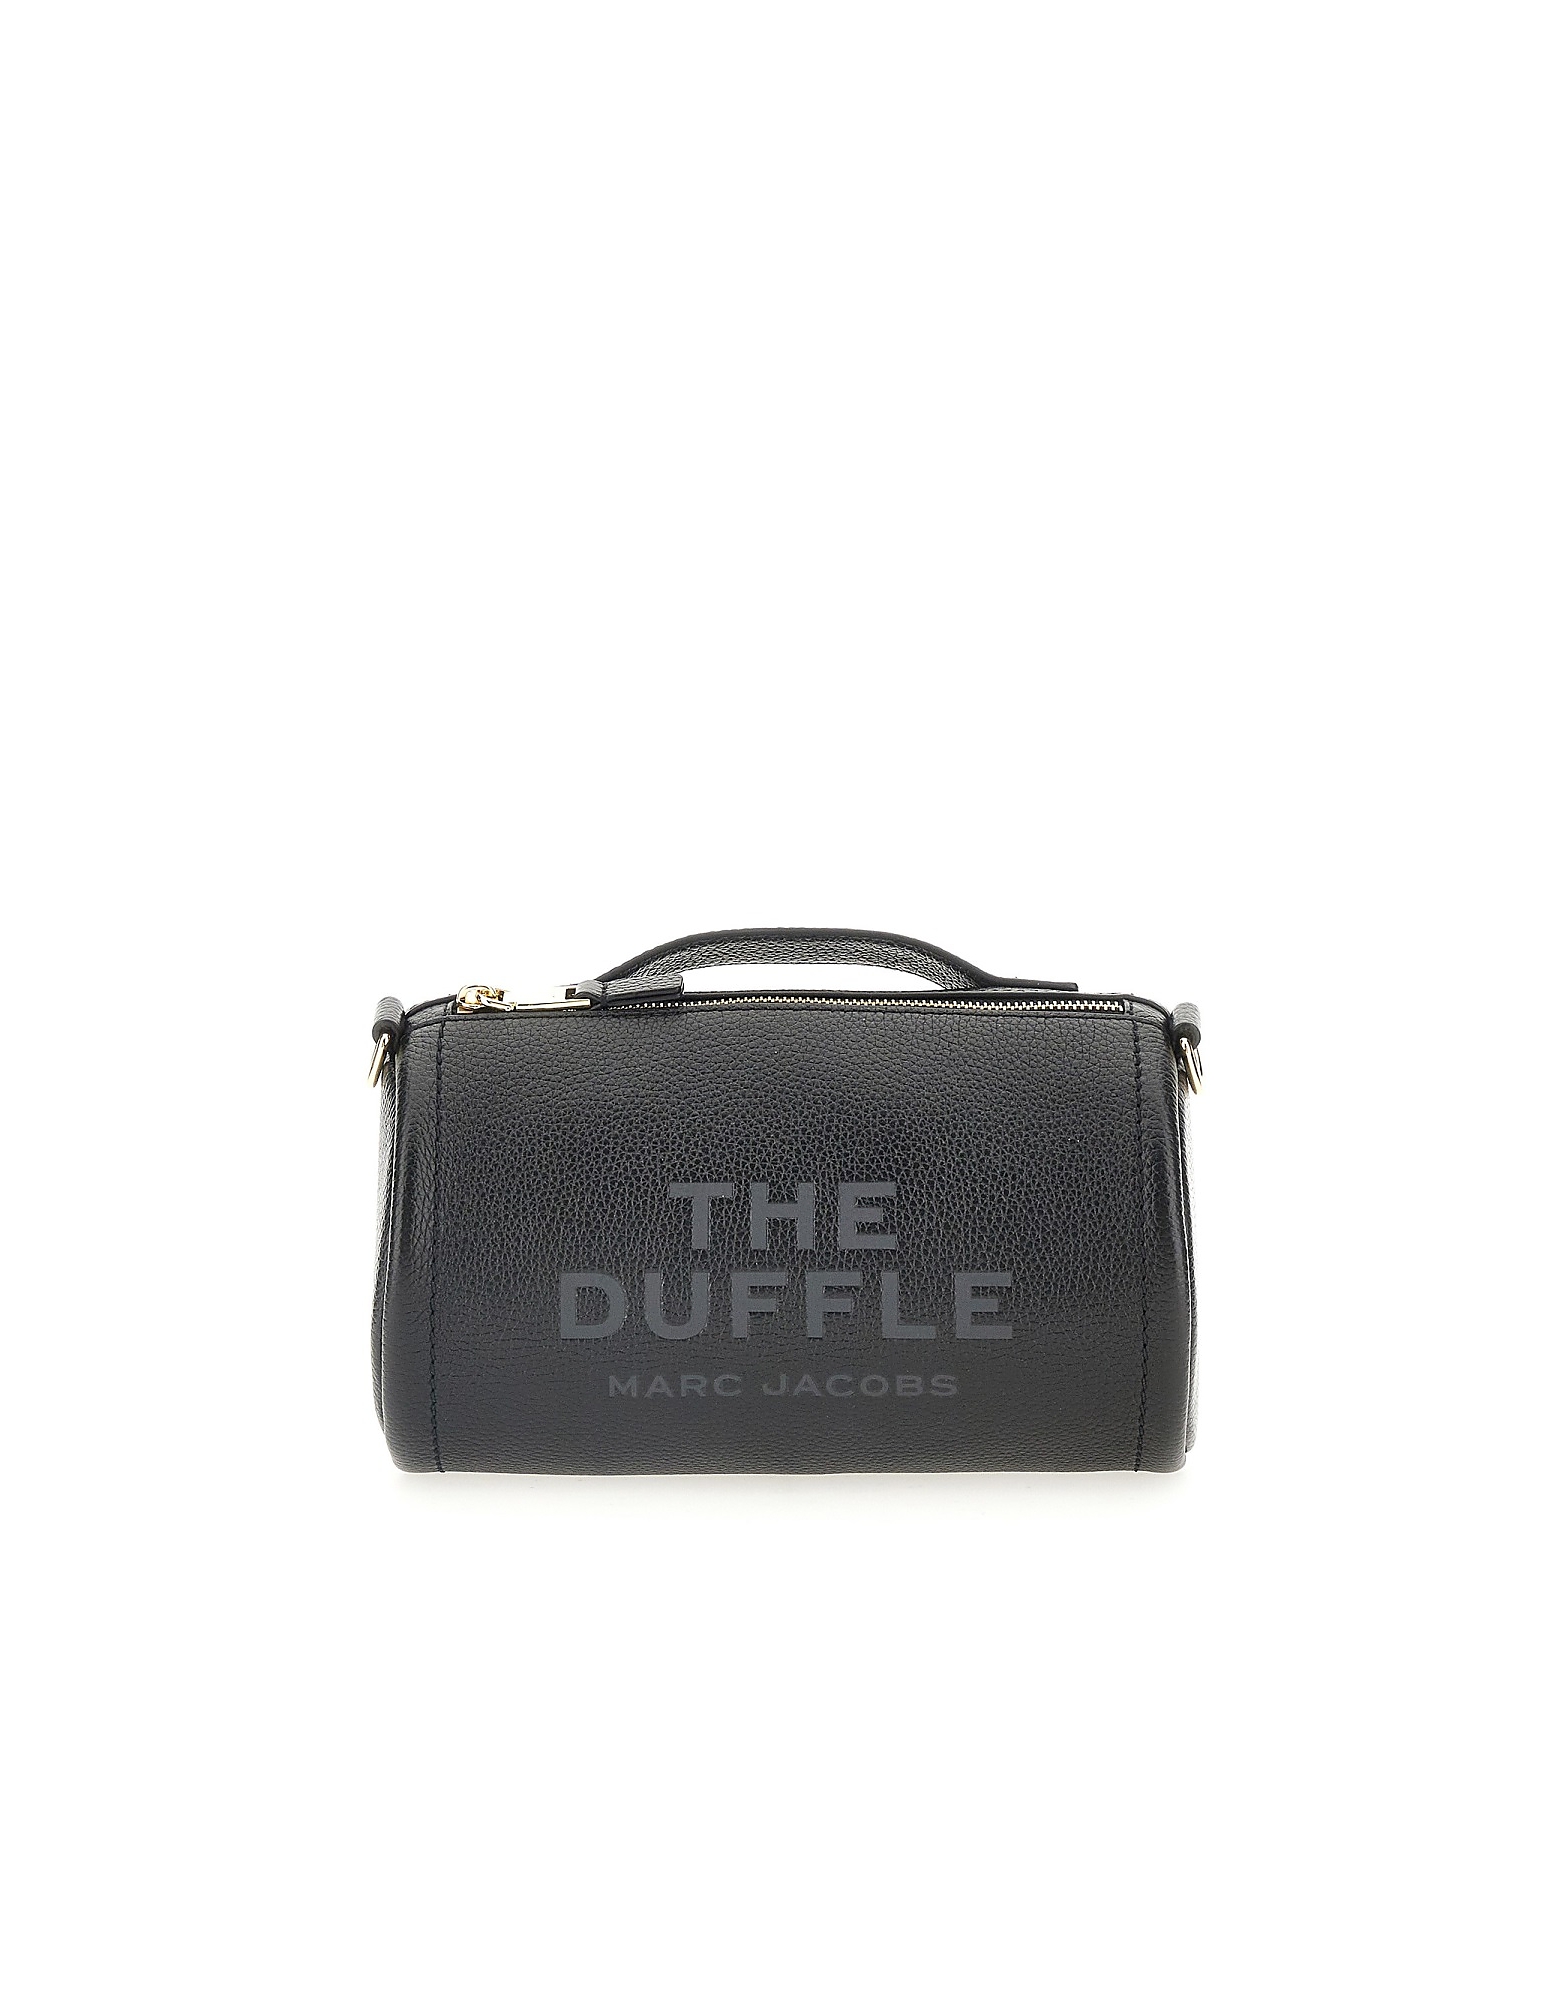 Marc Jacobs Designer Handbags "the Duffle" Bag In Black